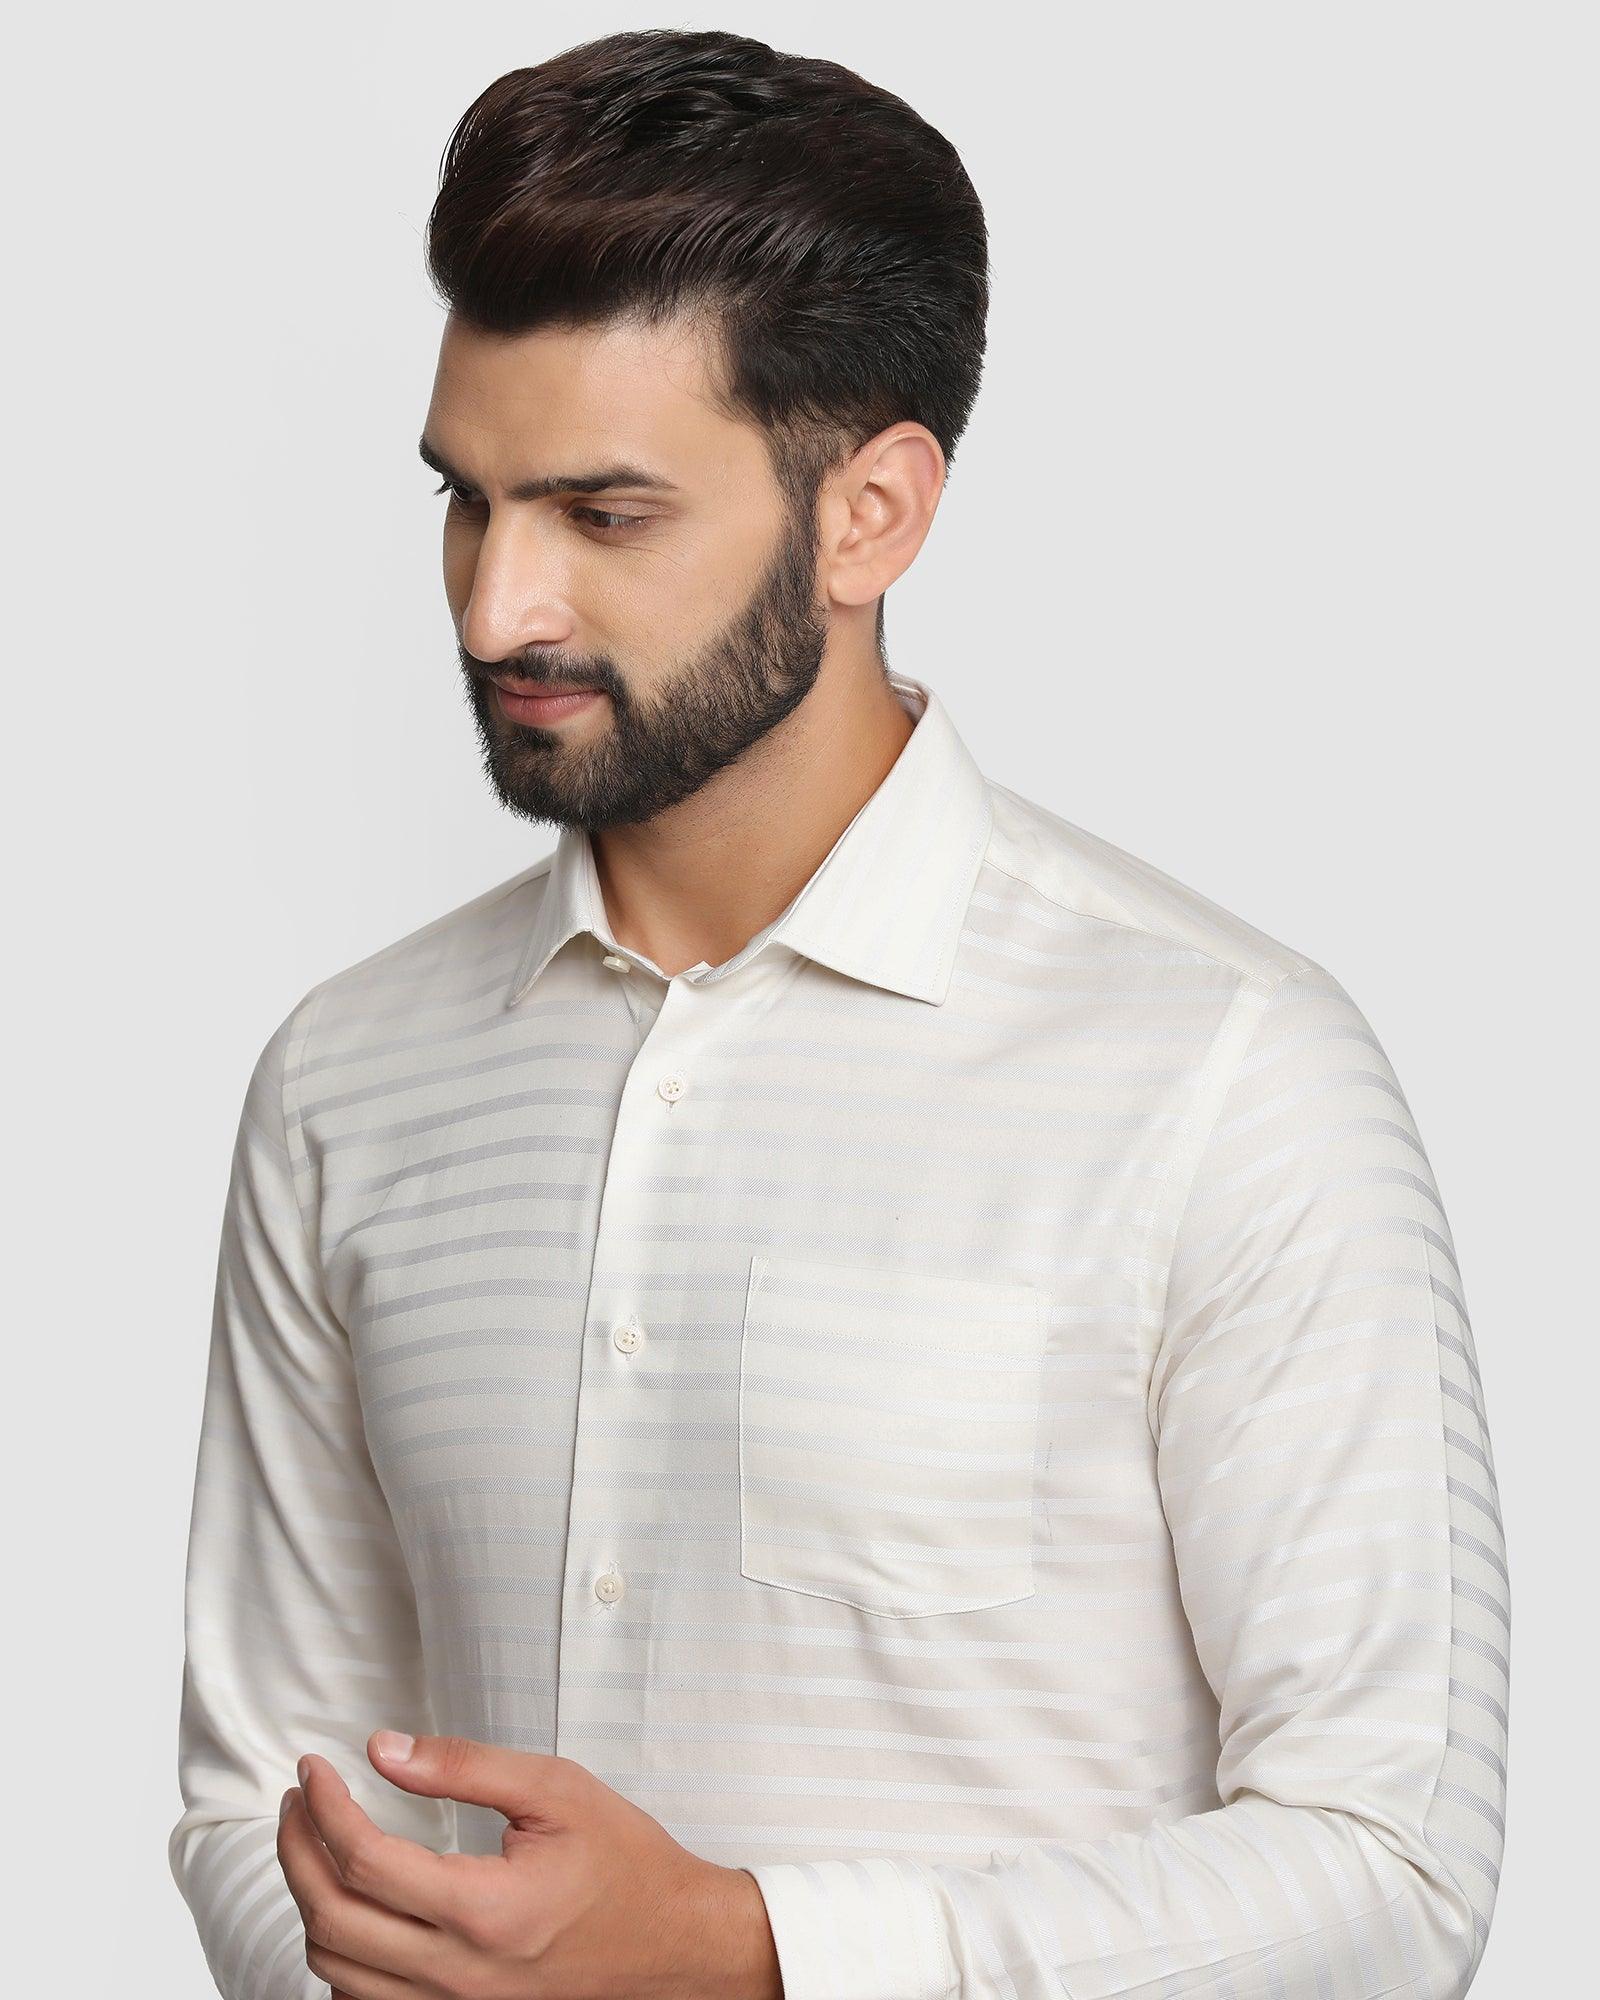 Formal Cream Striped Shirt Mentos For Men By Blackberry